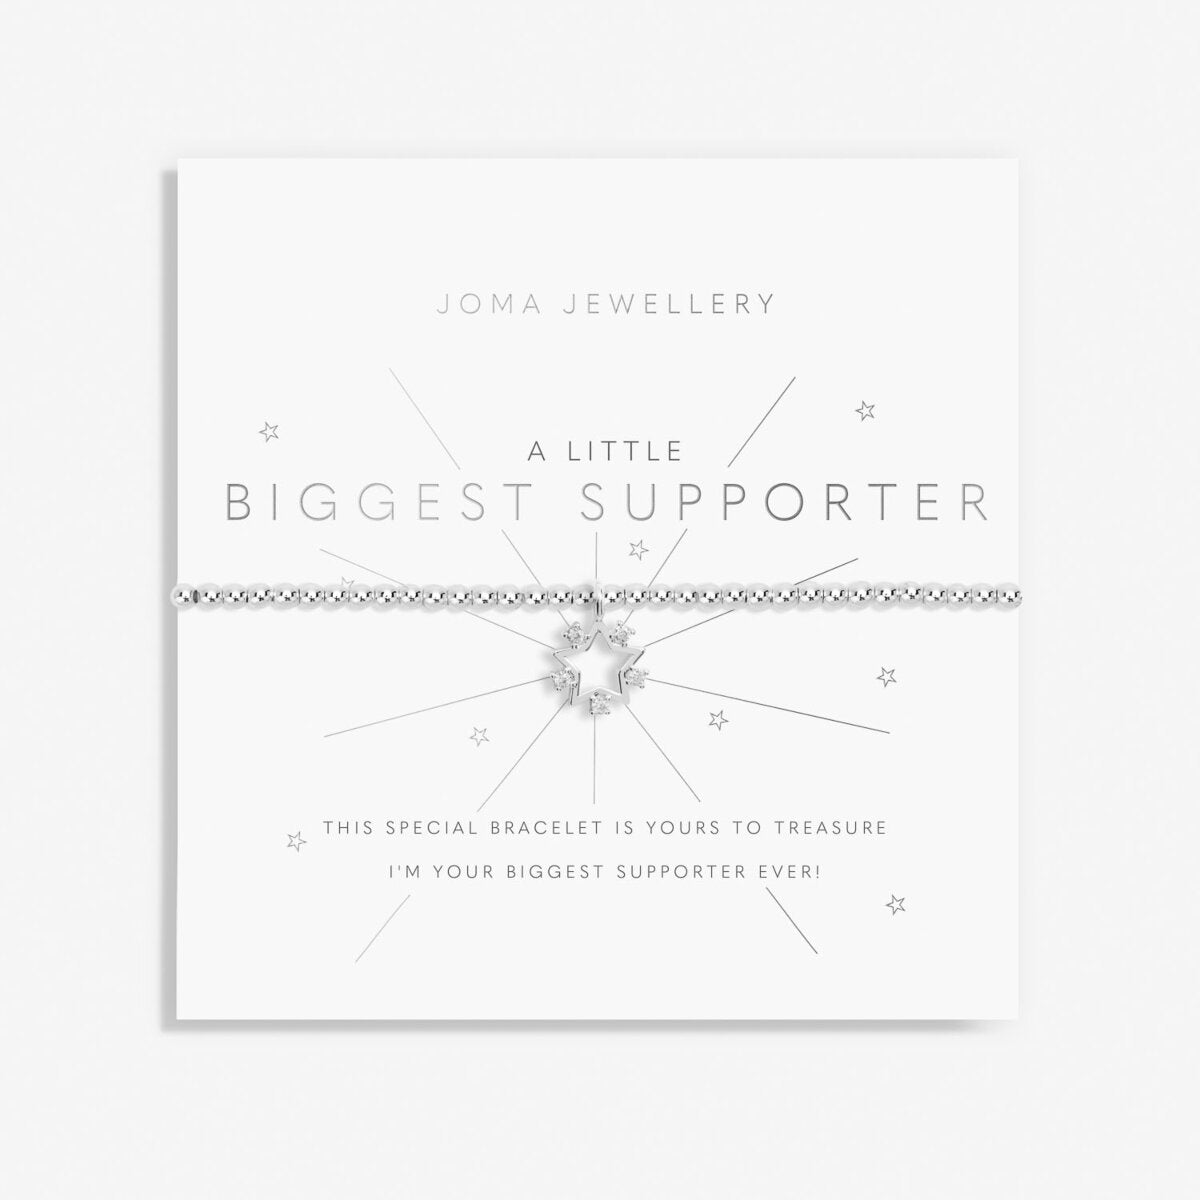 JOMA JEWELLERY | A LITTLE | BIGGEST SUPPORTER BRACELET